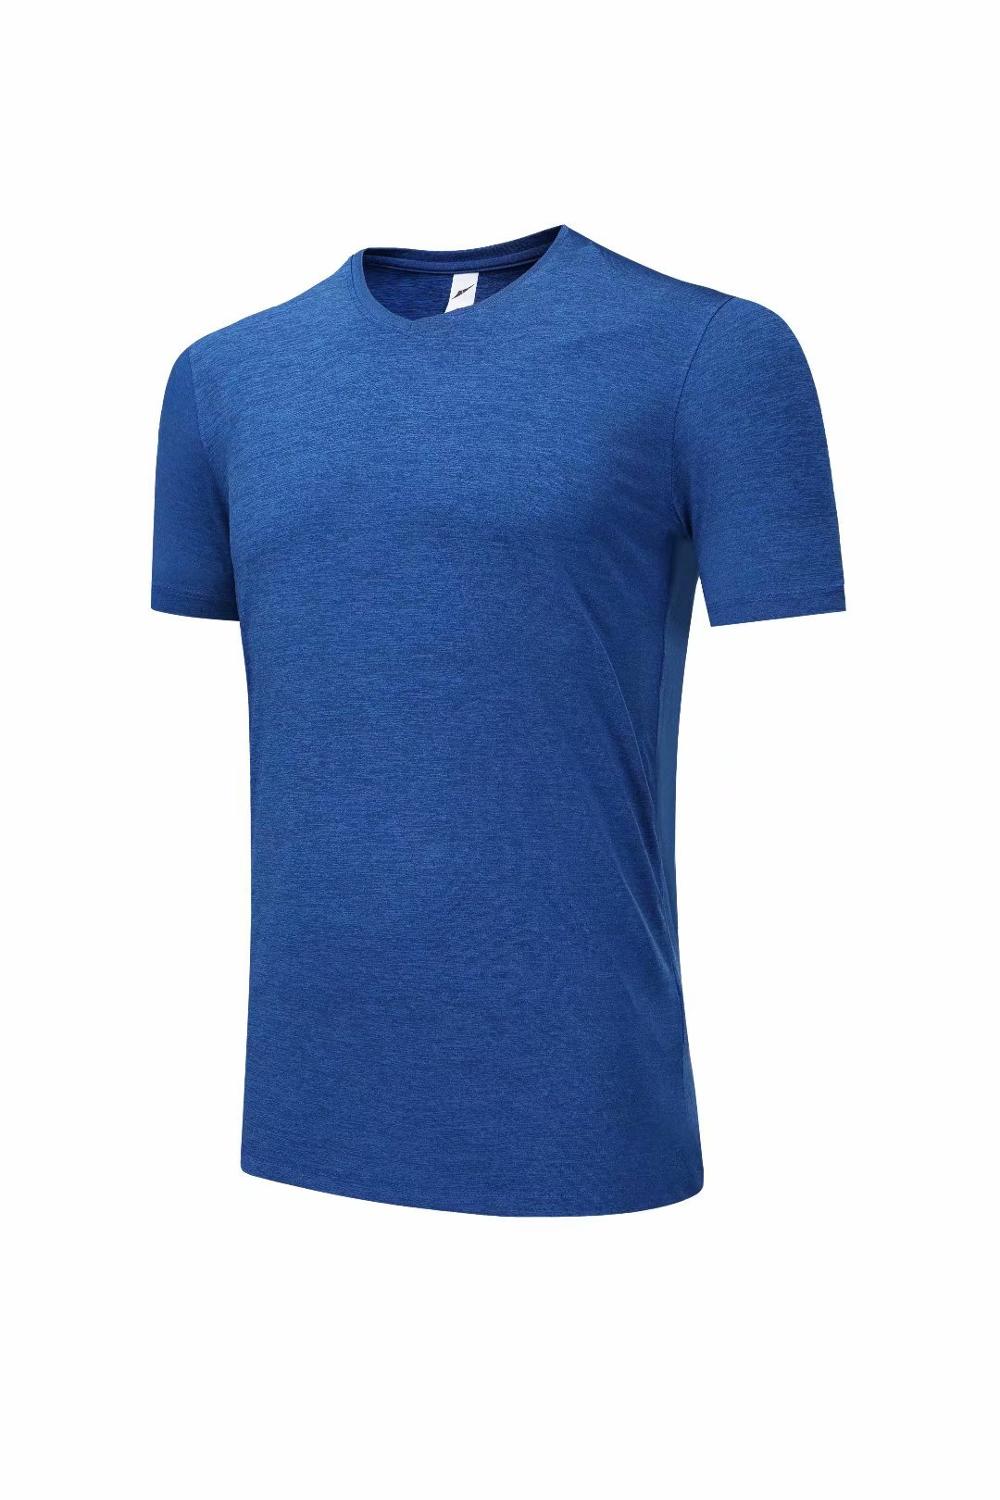 1809 Blue Sky Training T-shirt